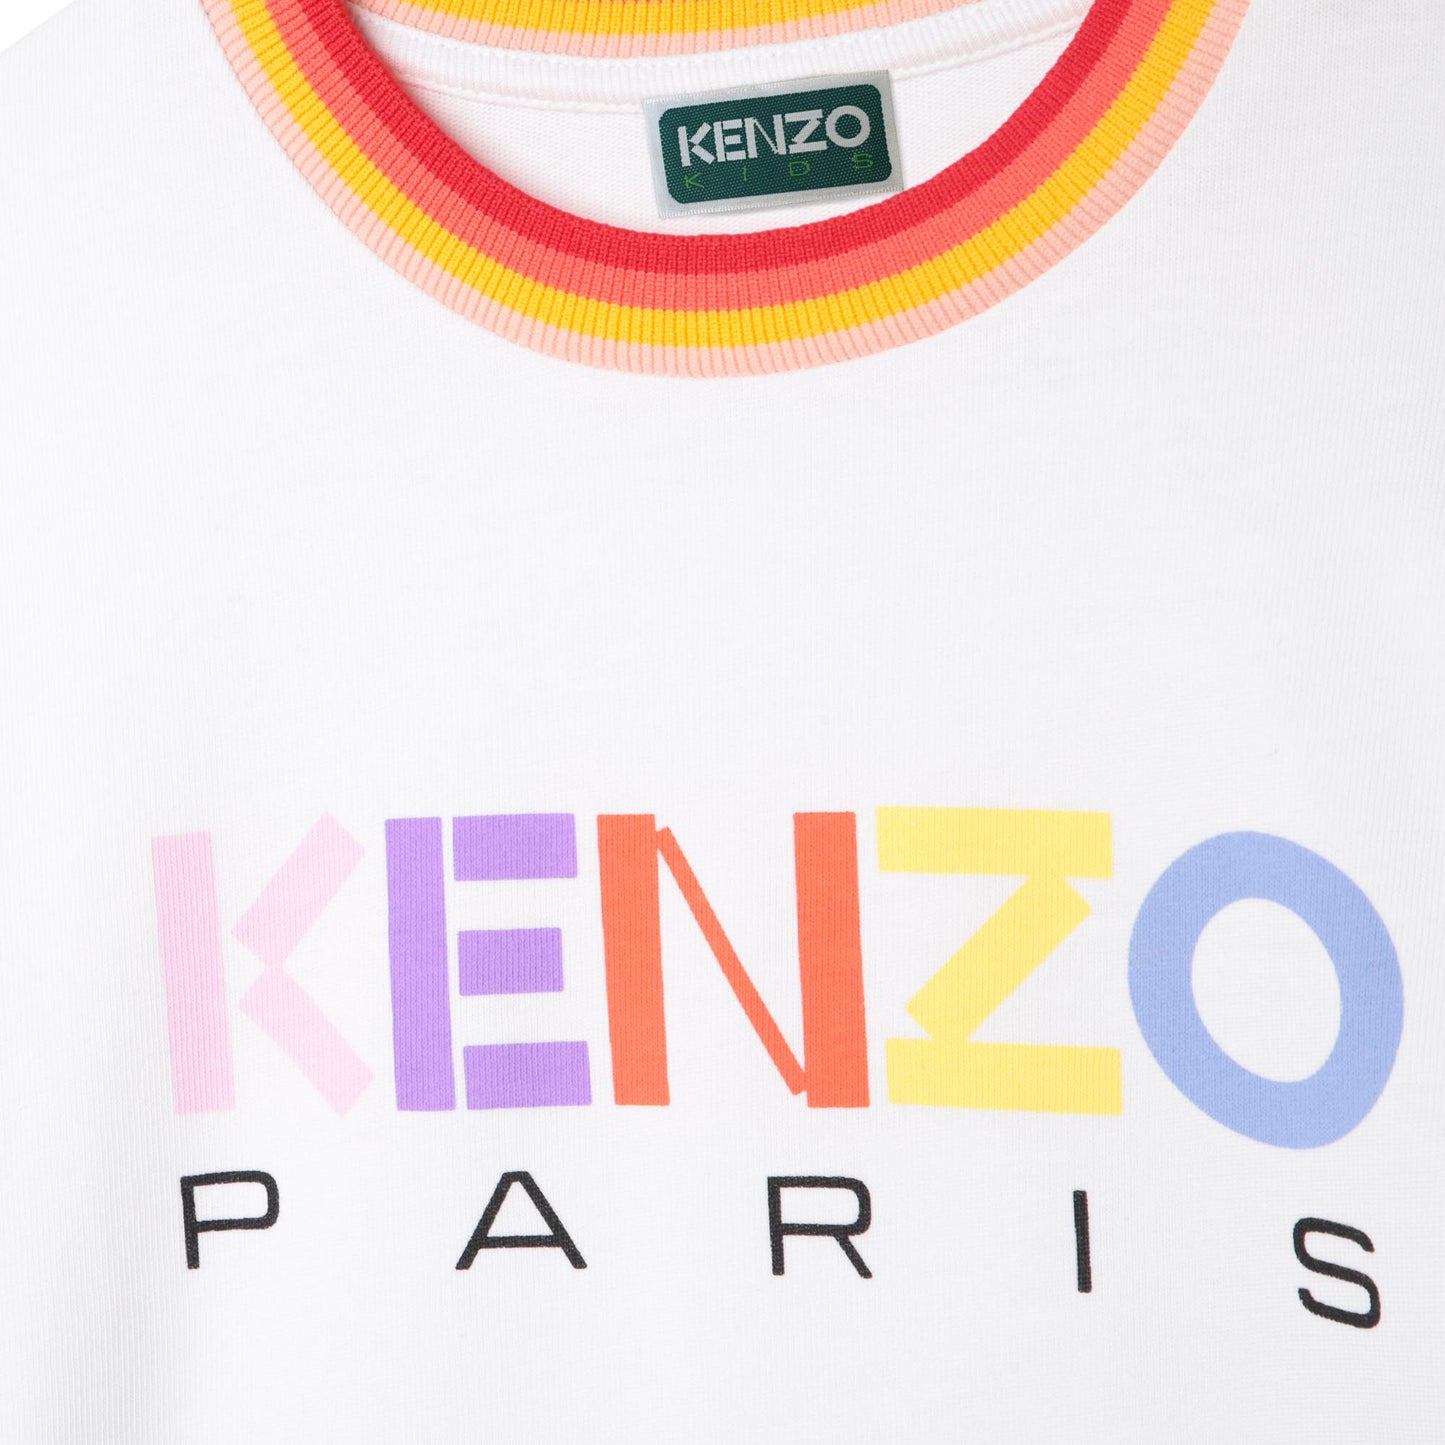 Kenzo Short Sleeved Tee Shirt w/ Colorful Kenzo Paris Print